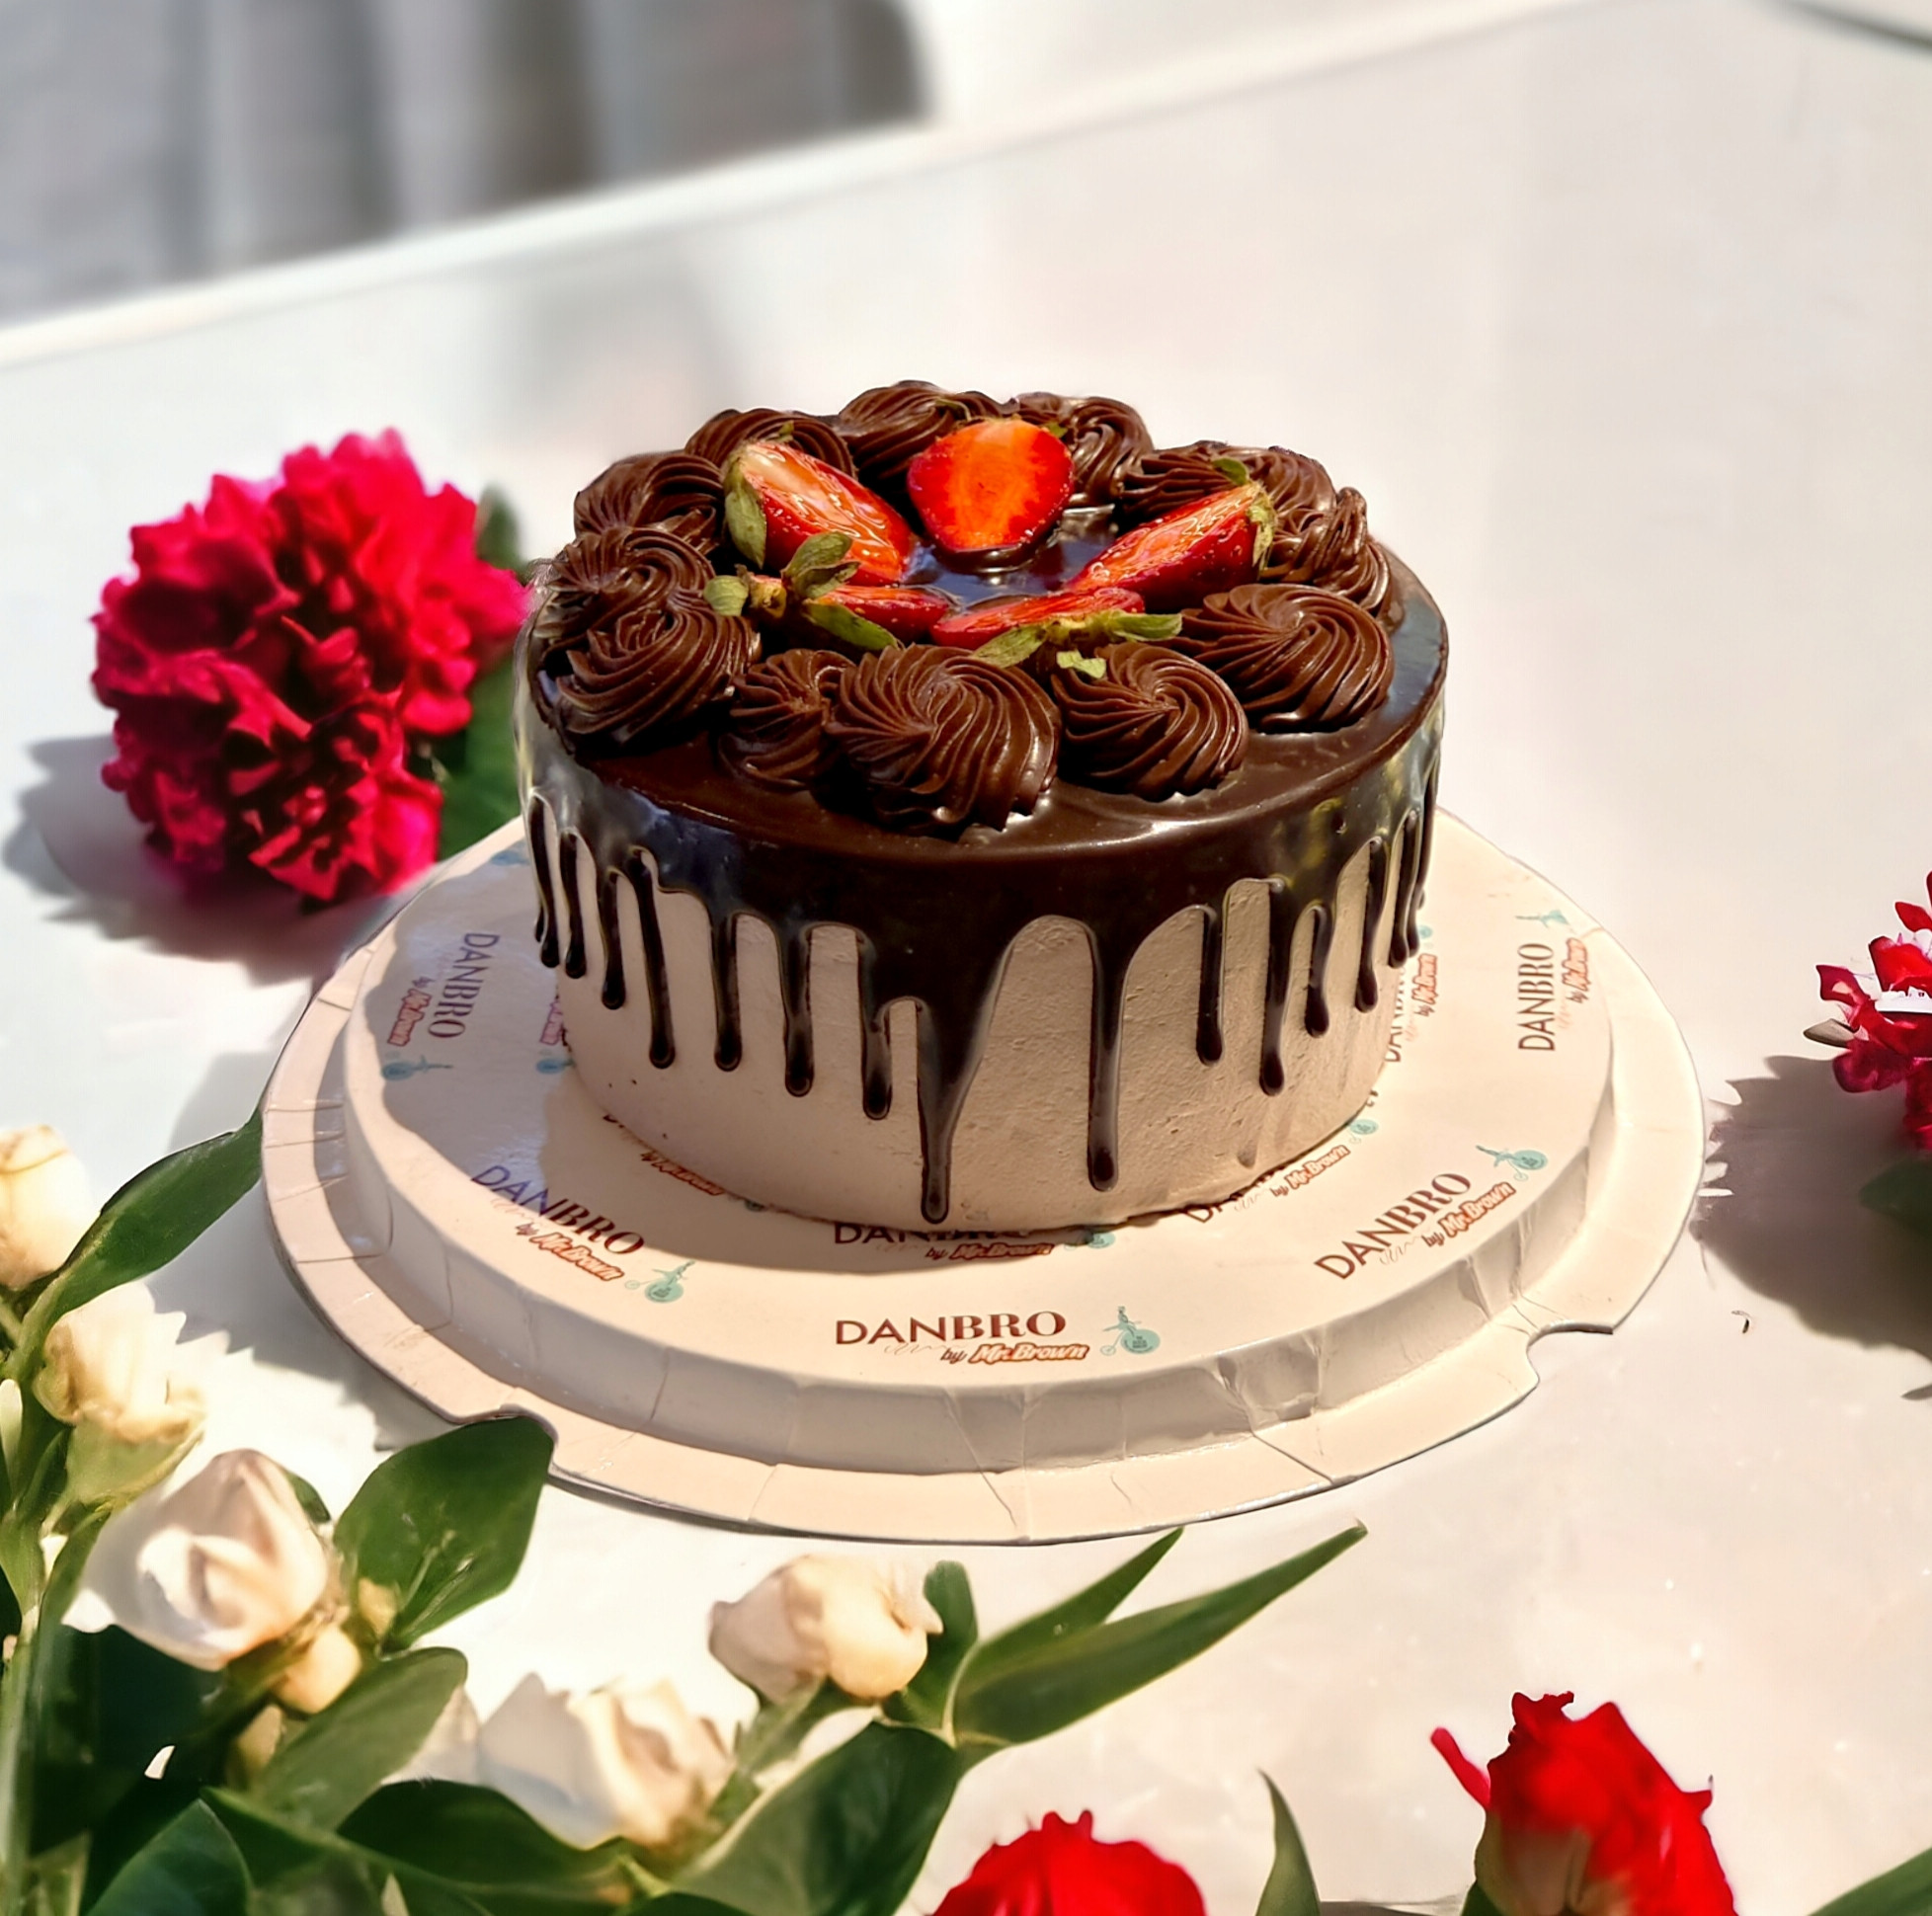 Sani's cake - Chocolate lover@ Crunchy Almond delight | Facebook